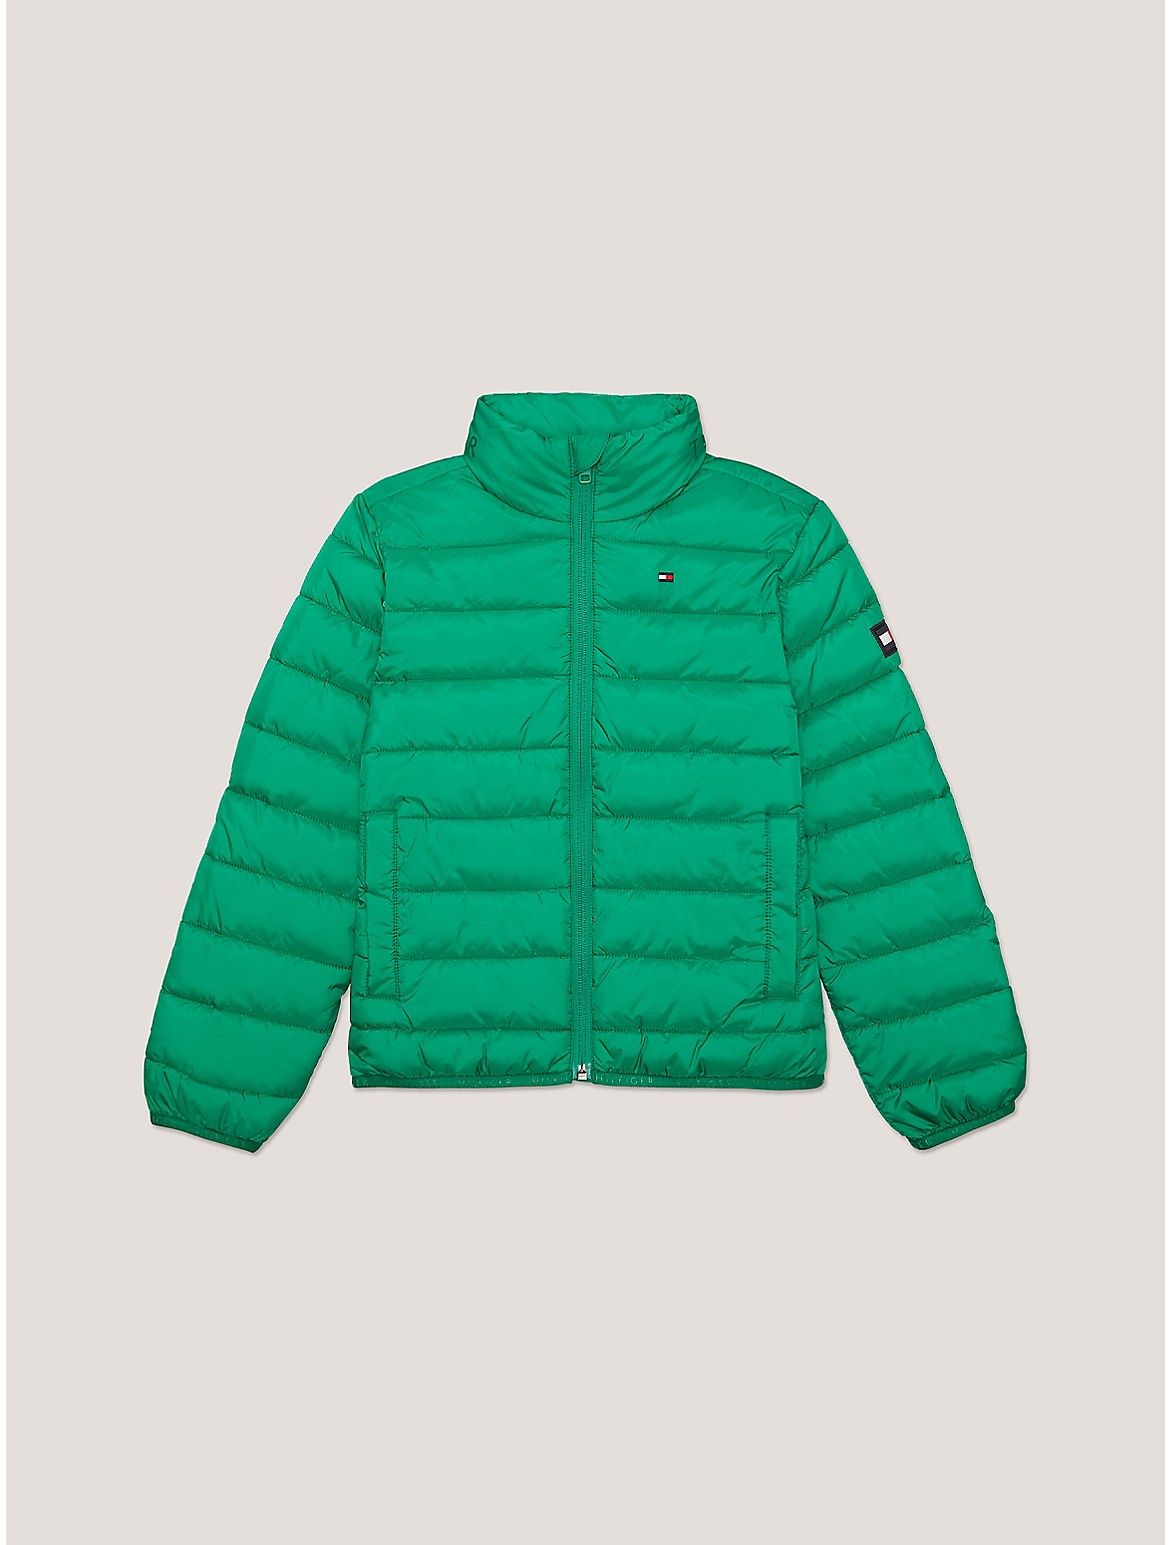 Tommy Hilfiger Boys' Kids' Insulated Jacket - Green - L